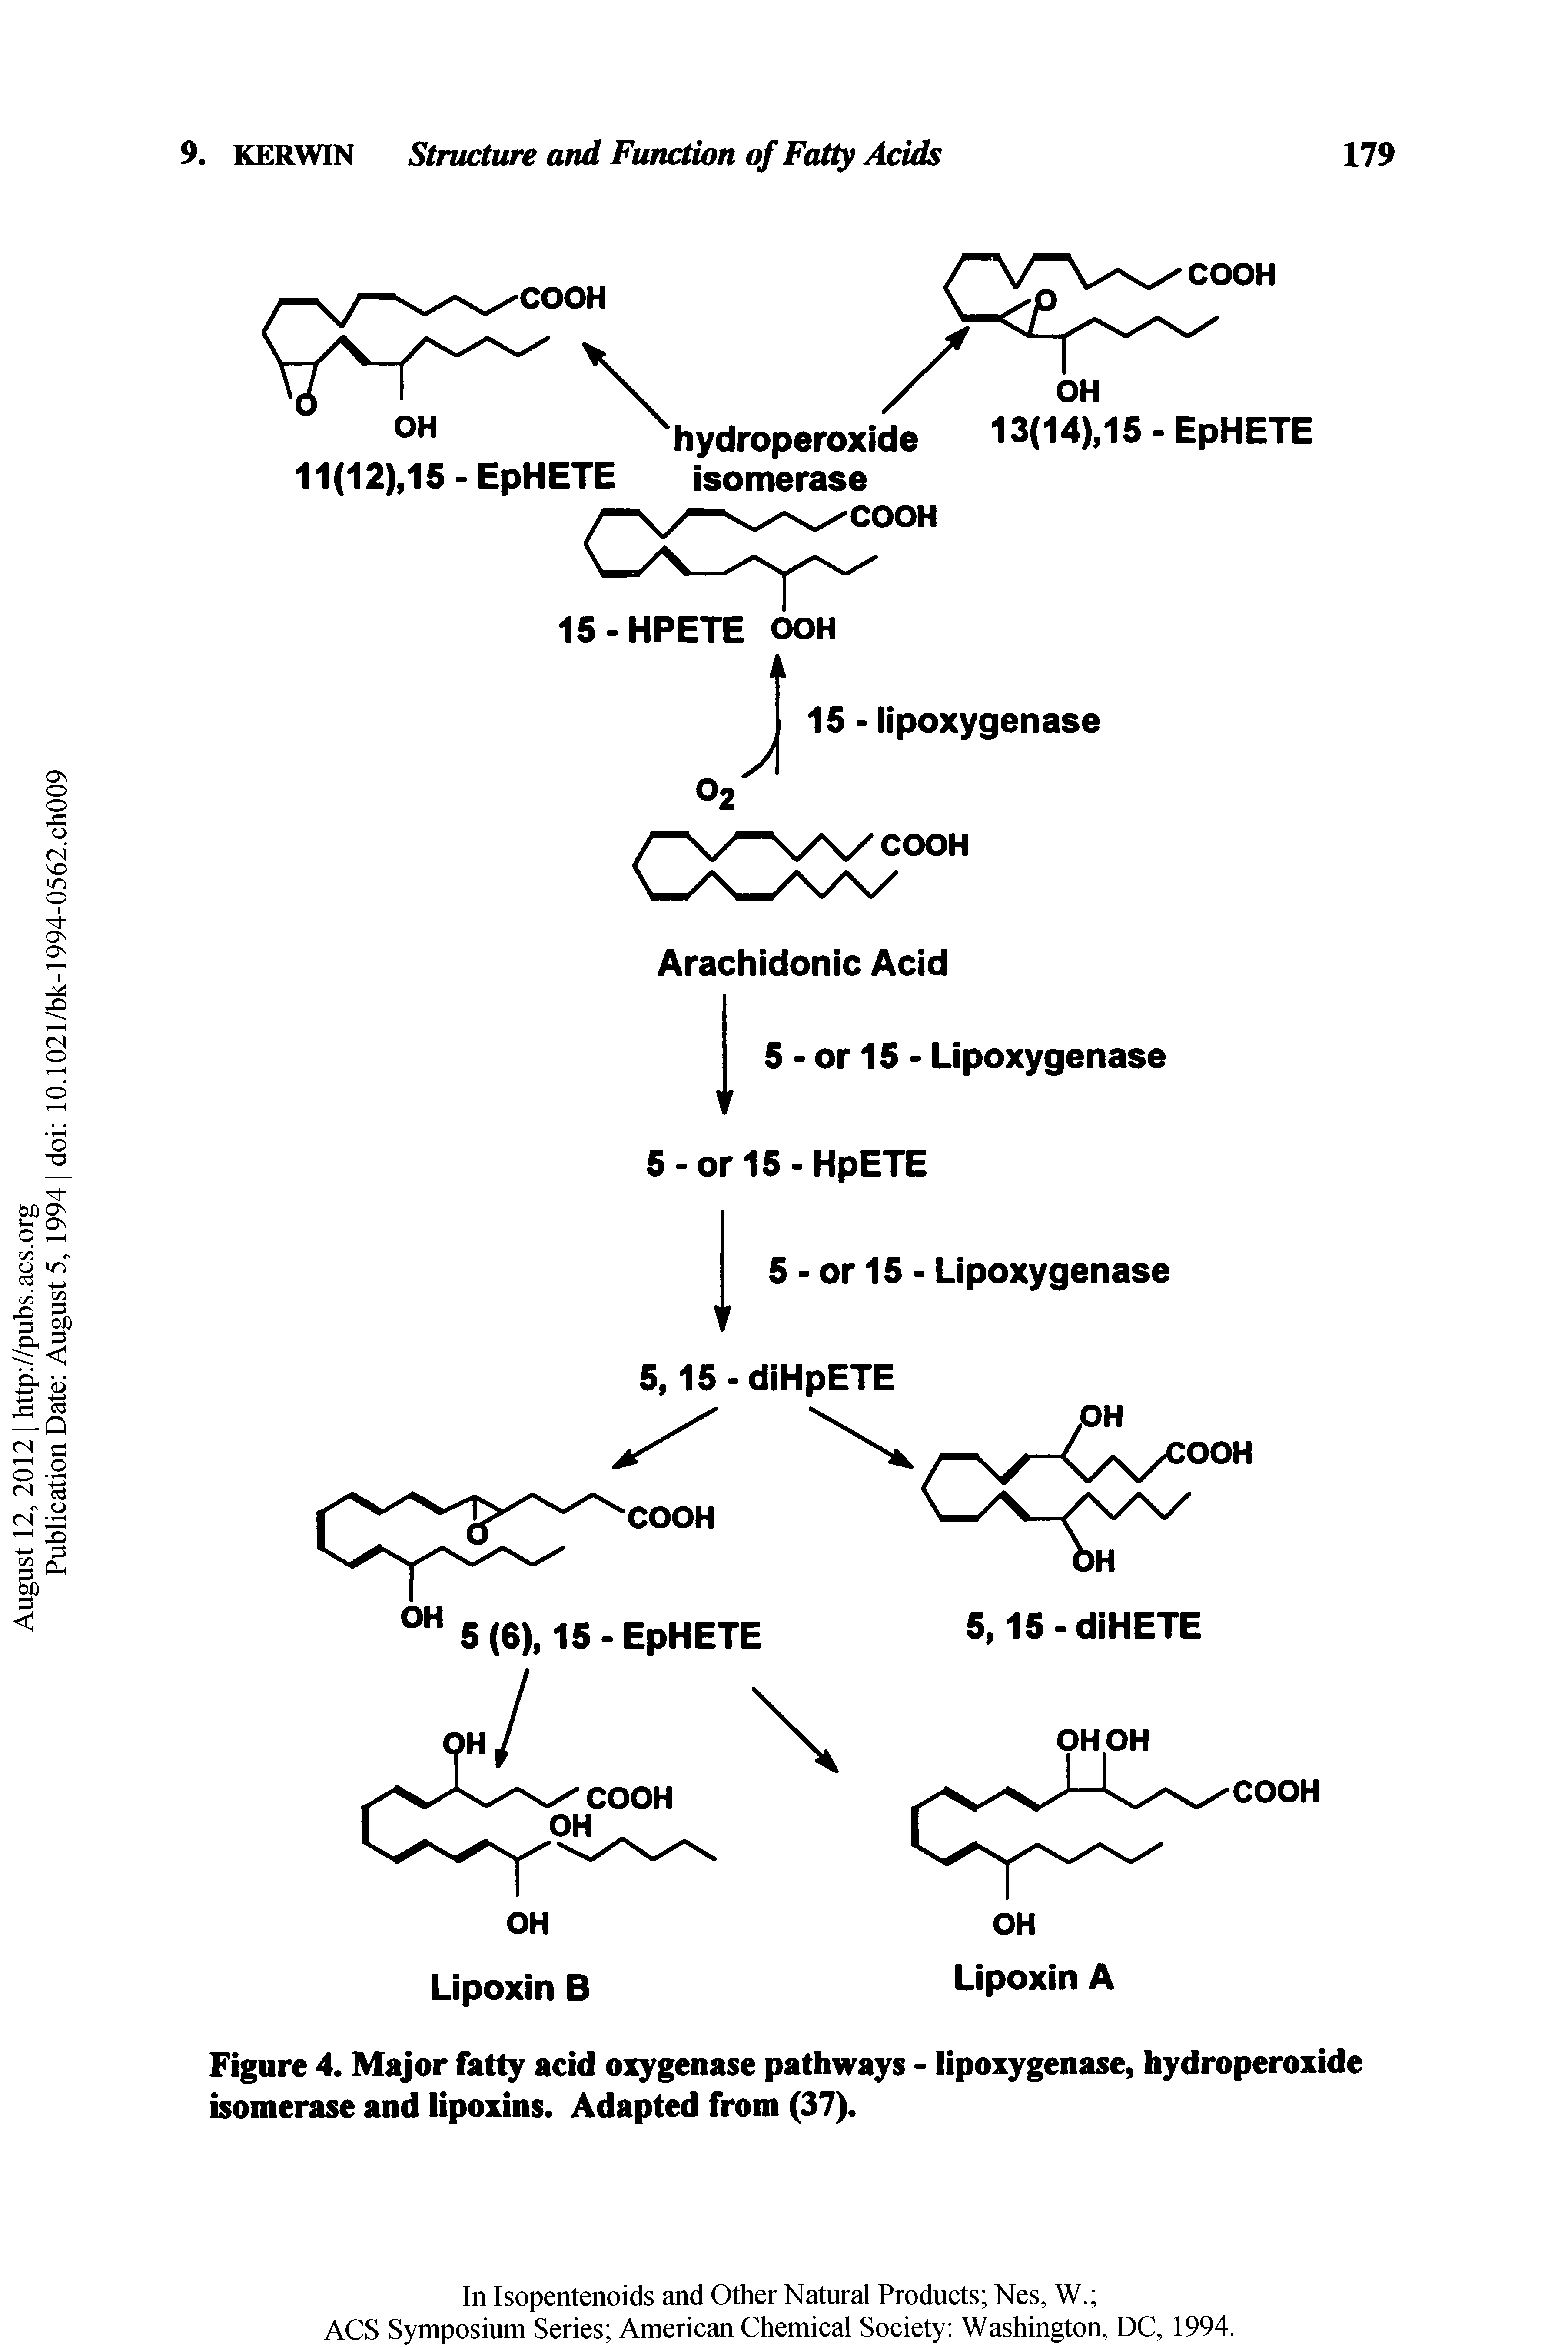 Figure 4. Major fatty acid oxygenase pathways - lipoxygenase, hydroperoxide isomerase and lipoxins. Adapted from (37).